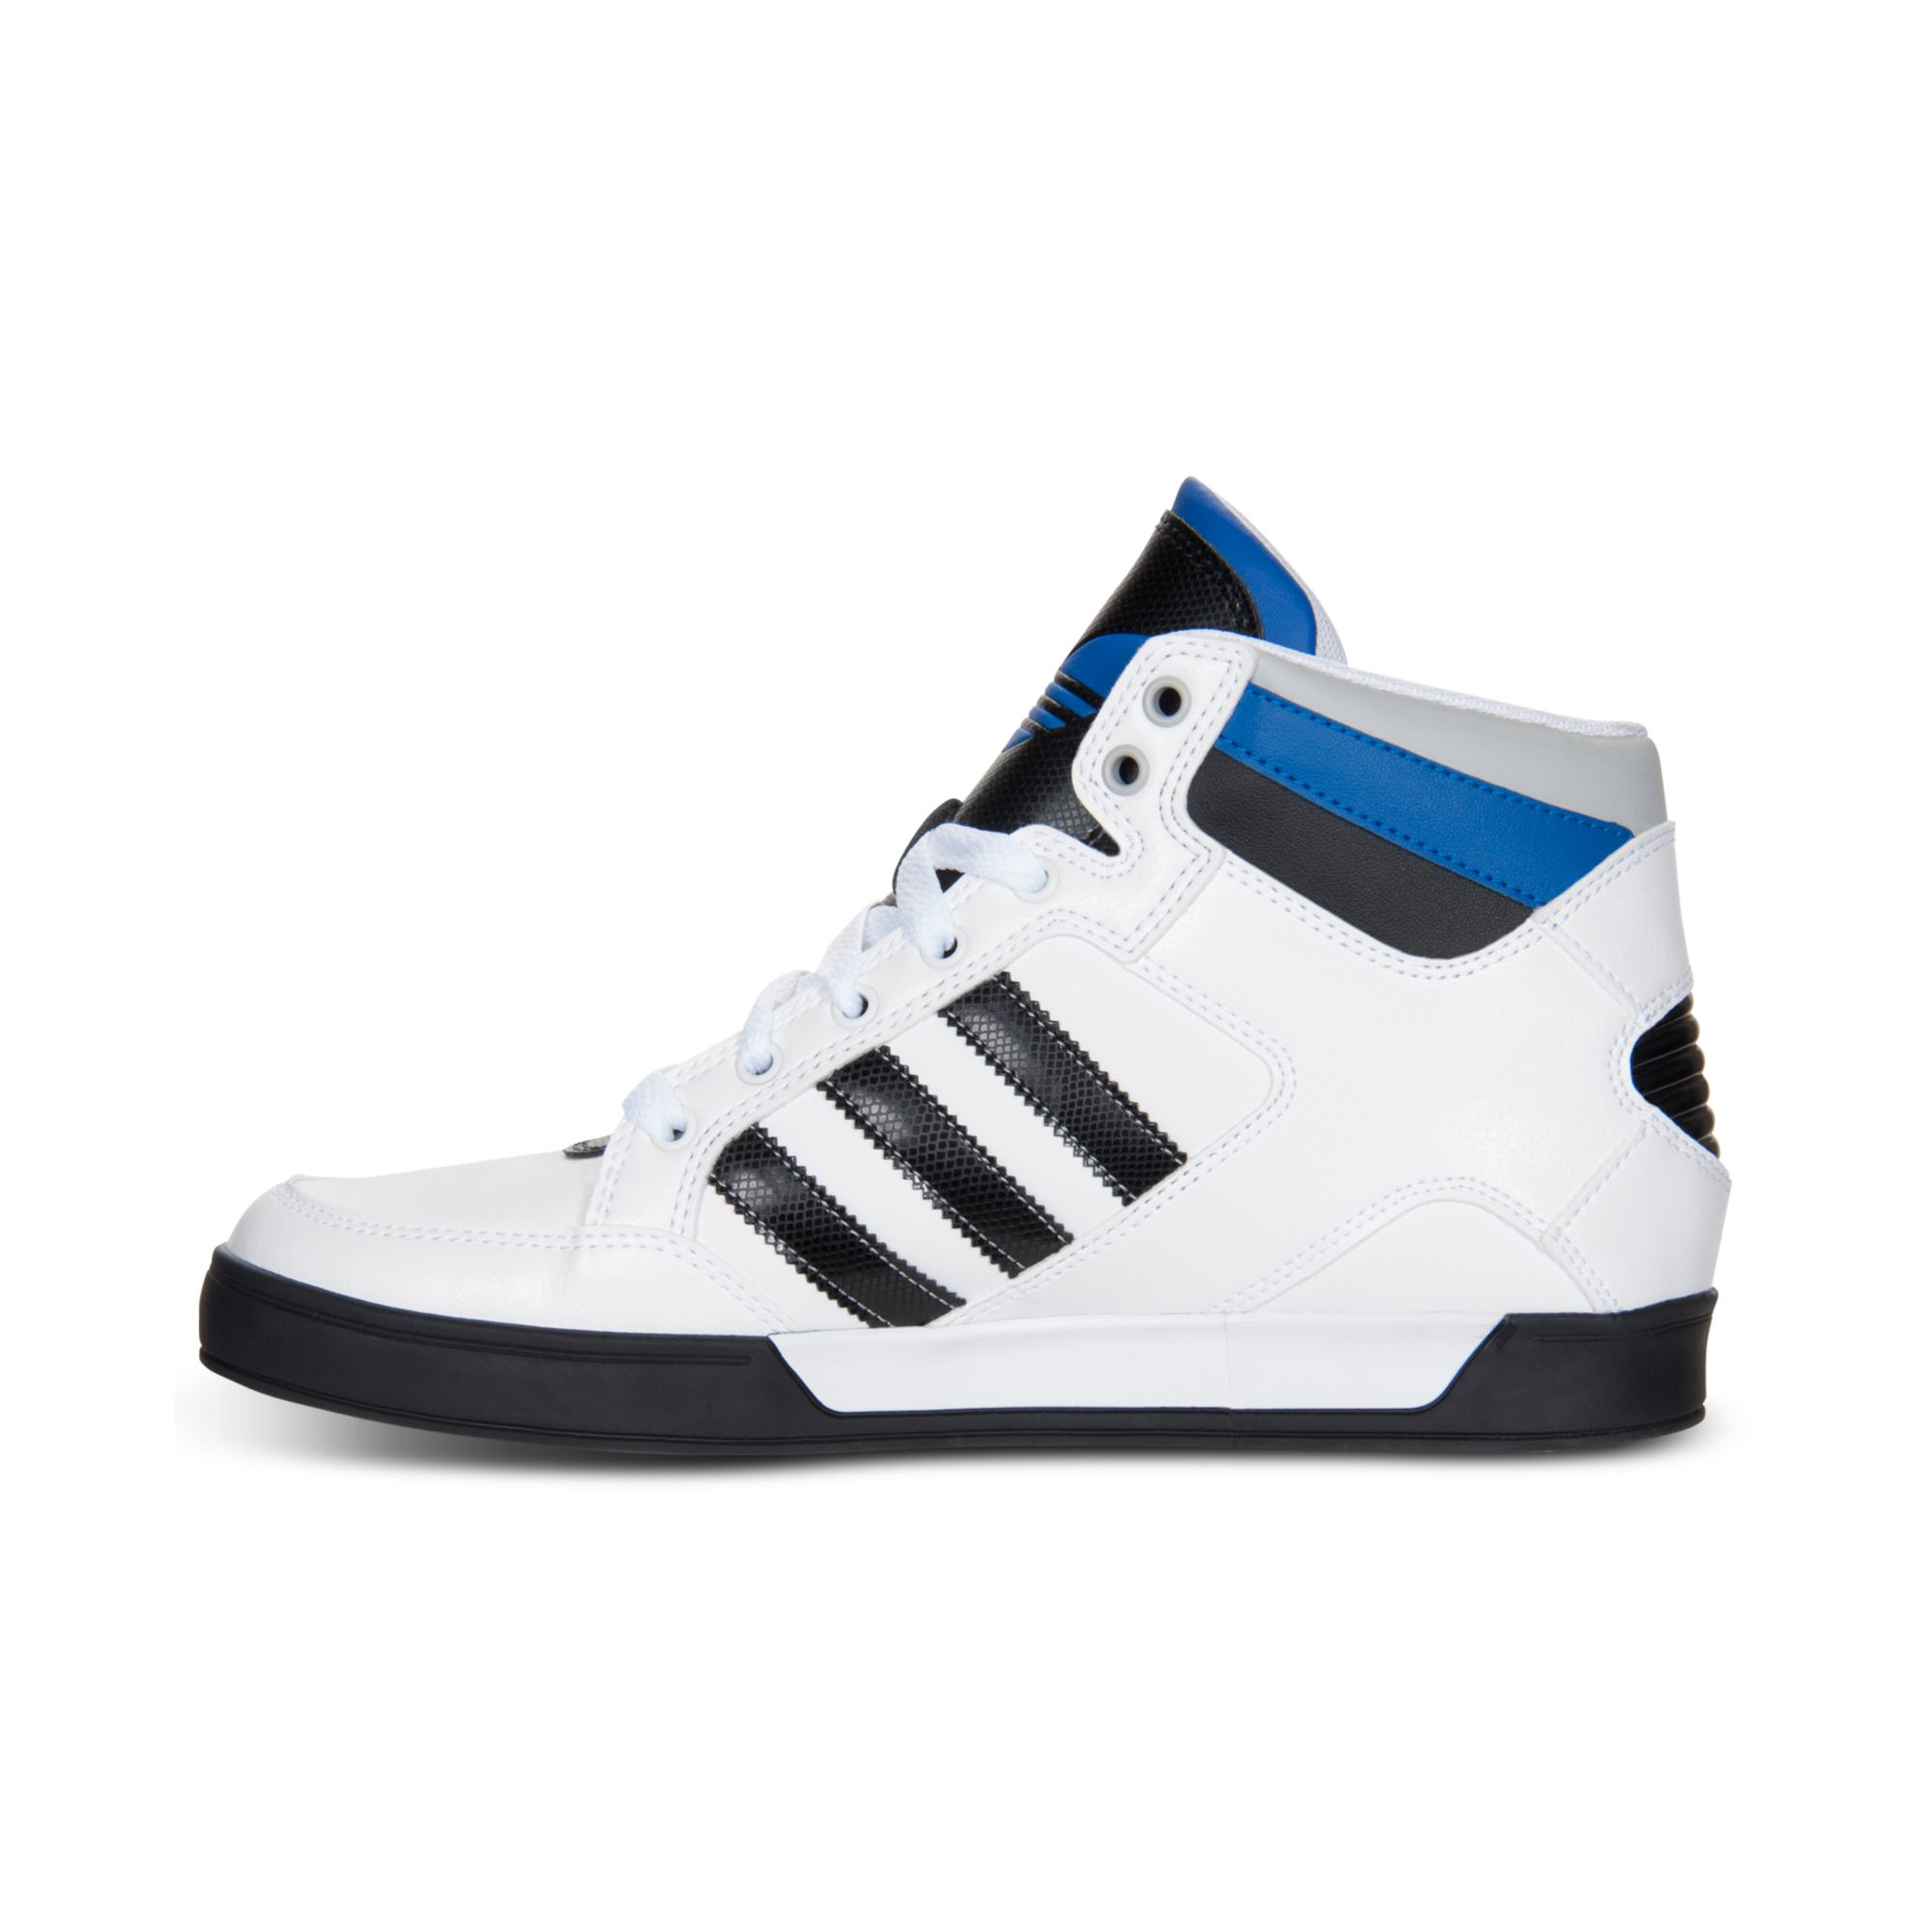 adidas Originals Hard Court Hi Casual Sneakers in White/Black/Blue ... عود مروكي طبيعي